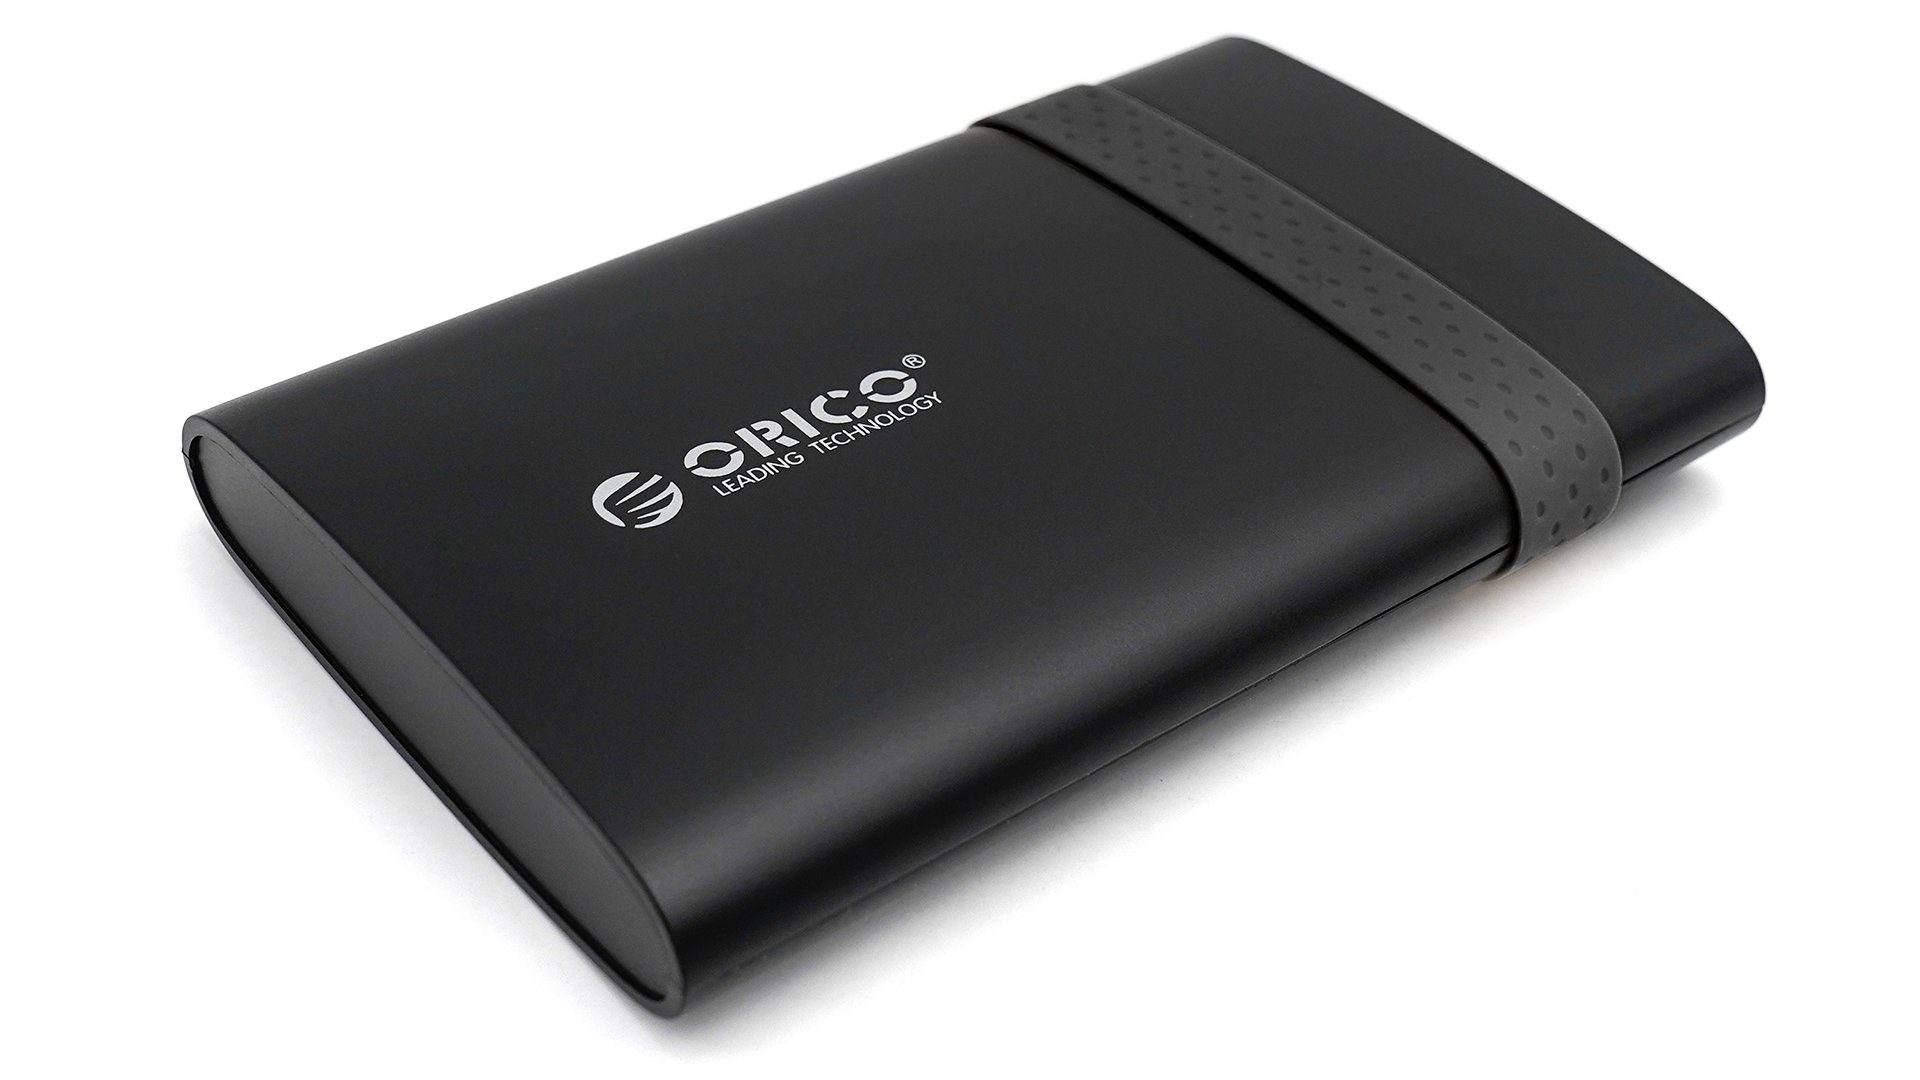 ORICO Orico 400GB USB 3.0 Externe Festplatte 2.5" HDD Tragbare - schwarz externe HDD-Festplatte (400GB) 2.5", für Fotos smart TV PC Mac Laptop Computer ps4 ps5 Xbox